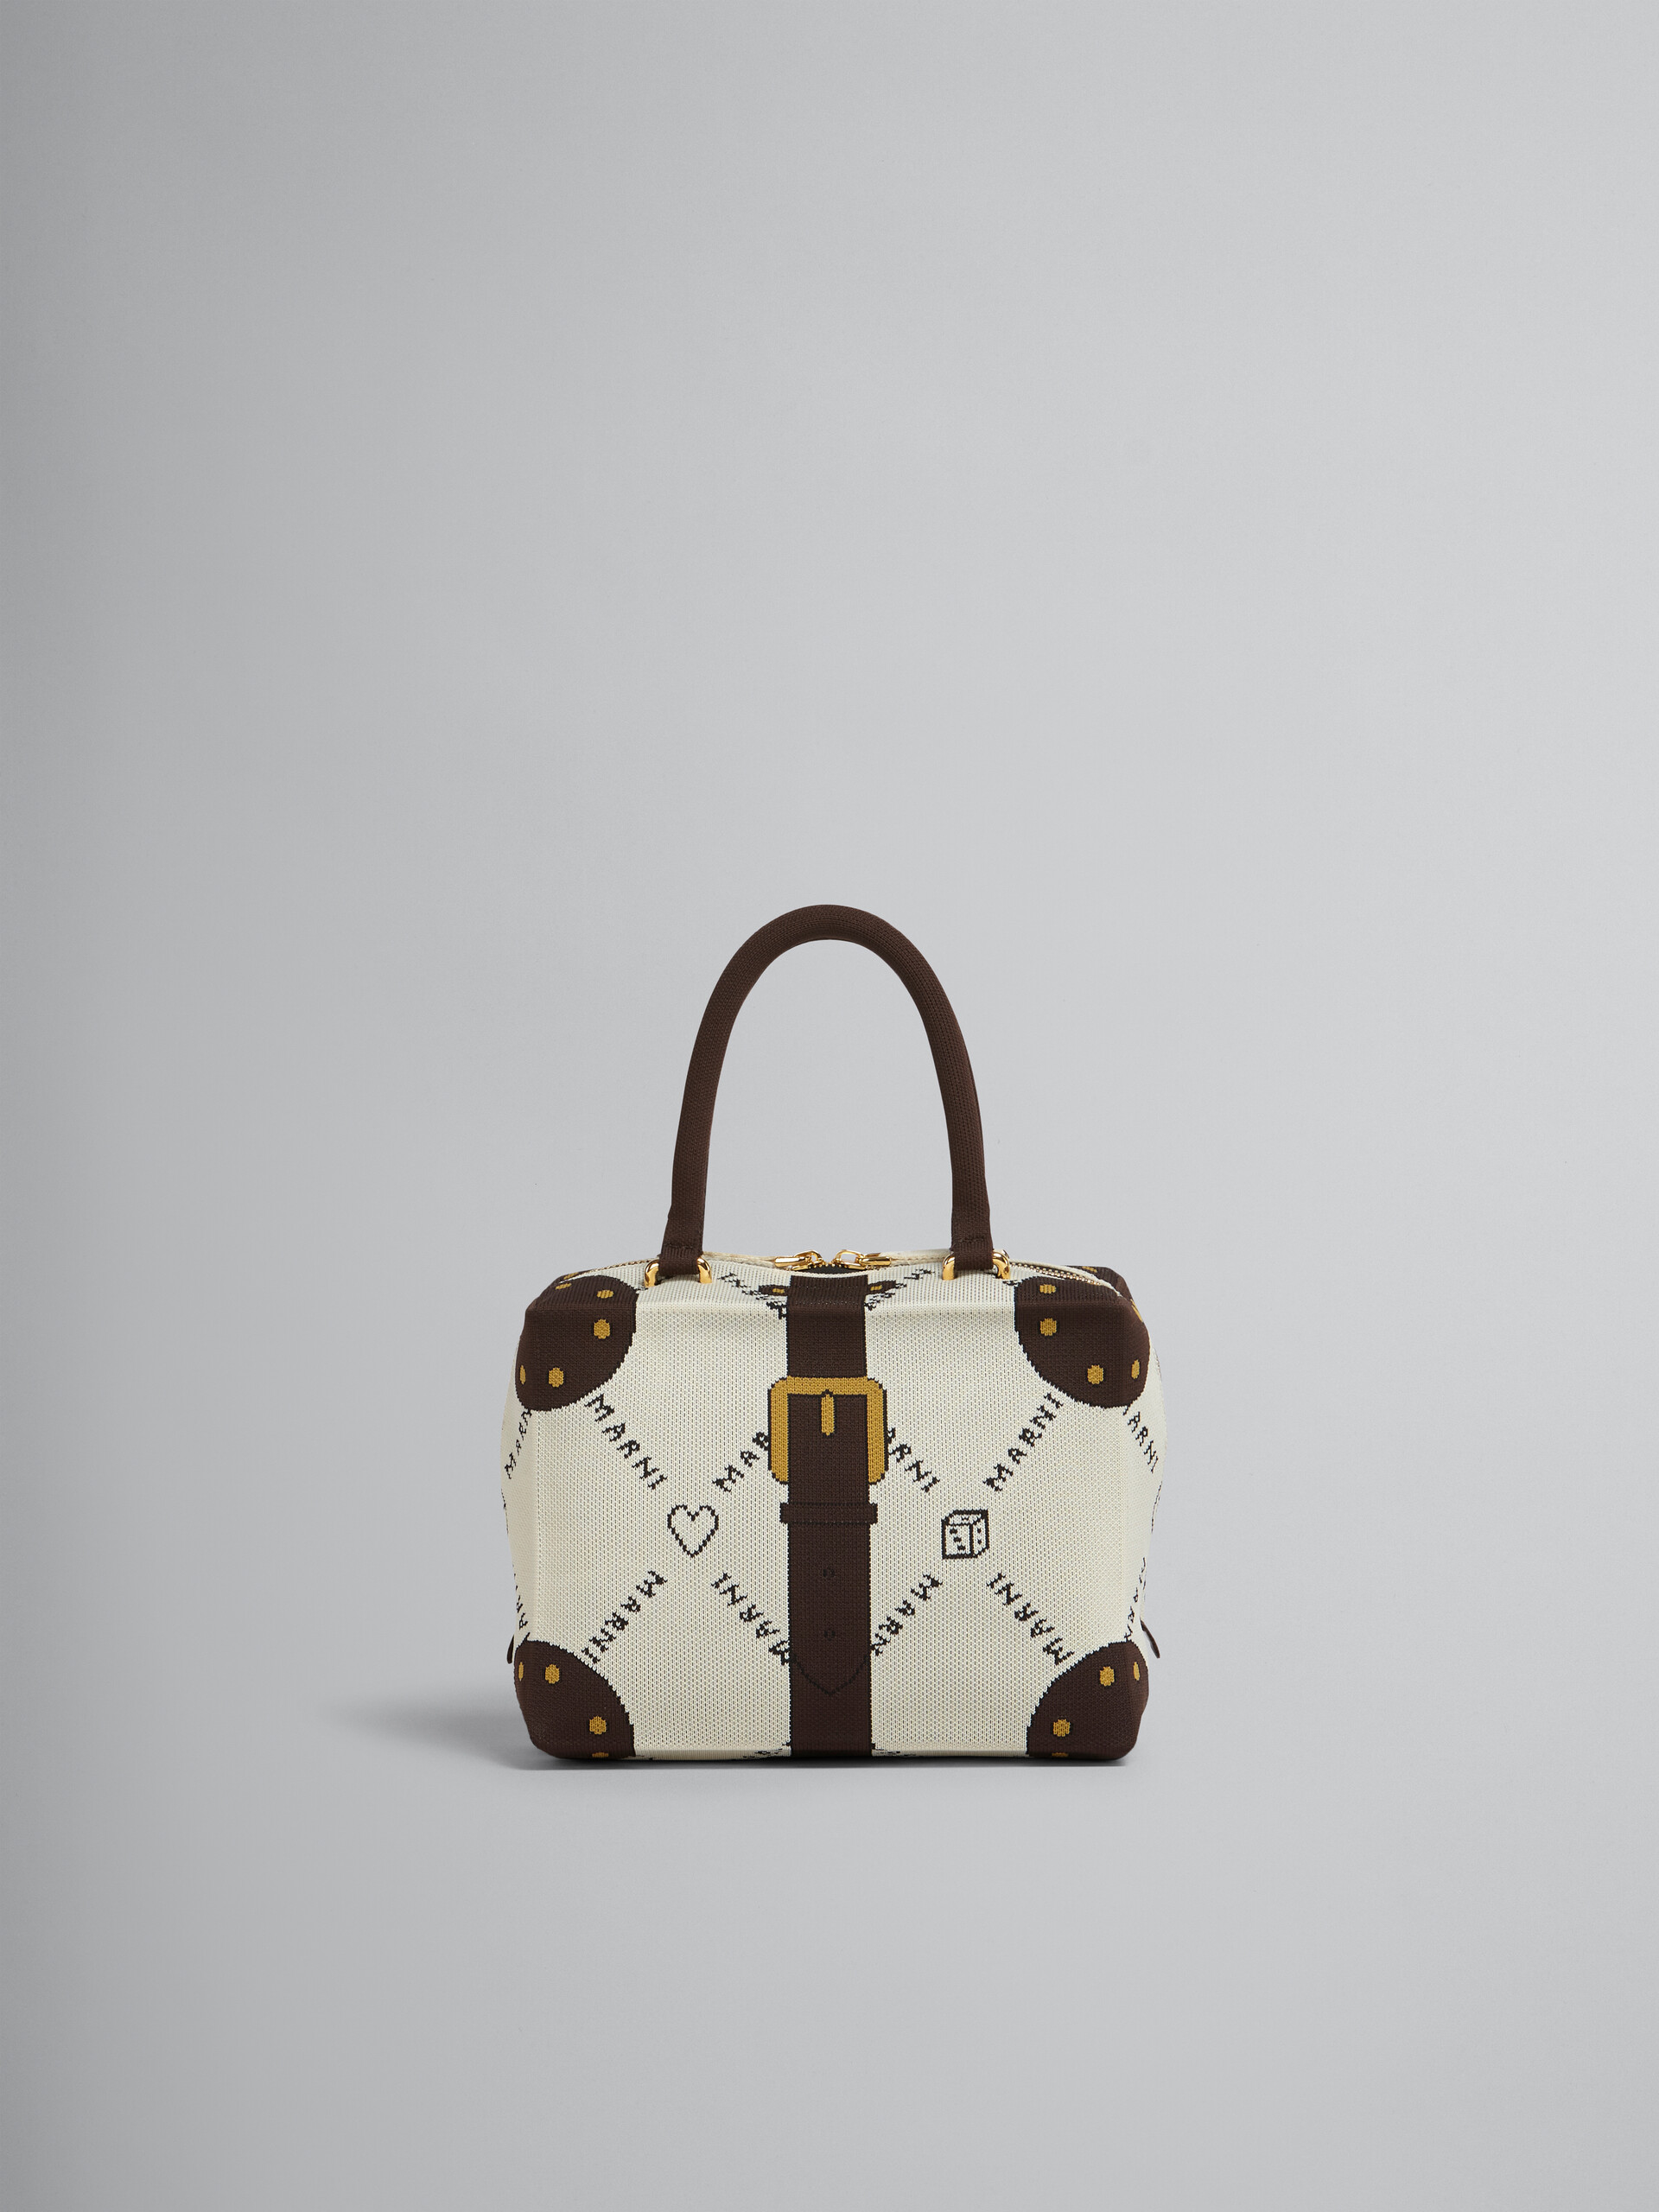 CUBIC bag in white Marnigram trompe-l'œil jacquard - Handbag - Image 1